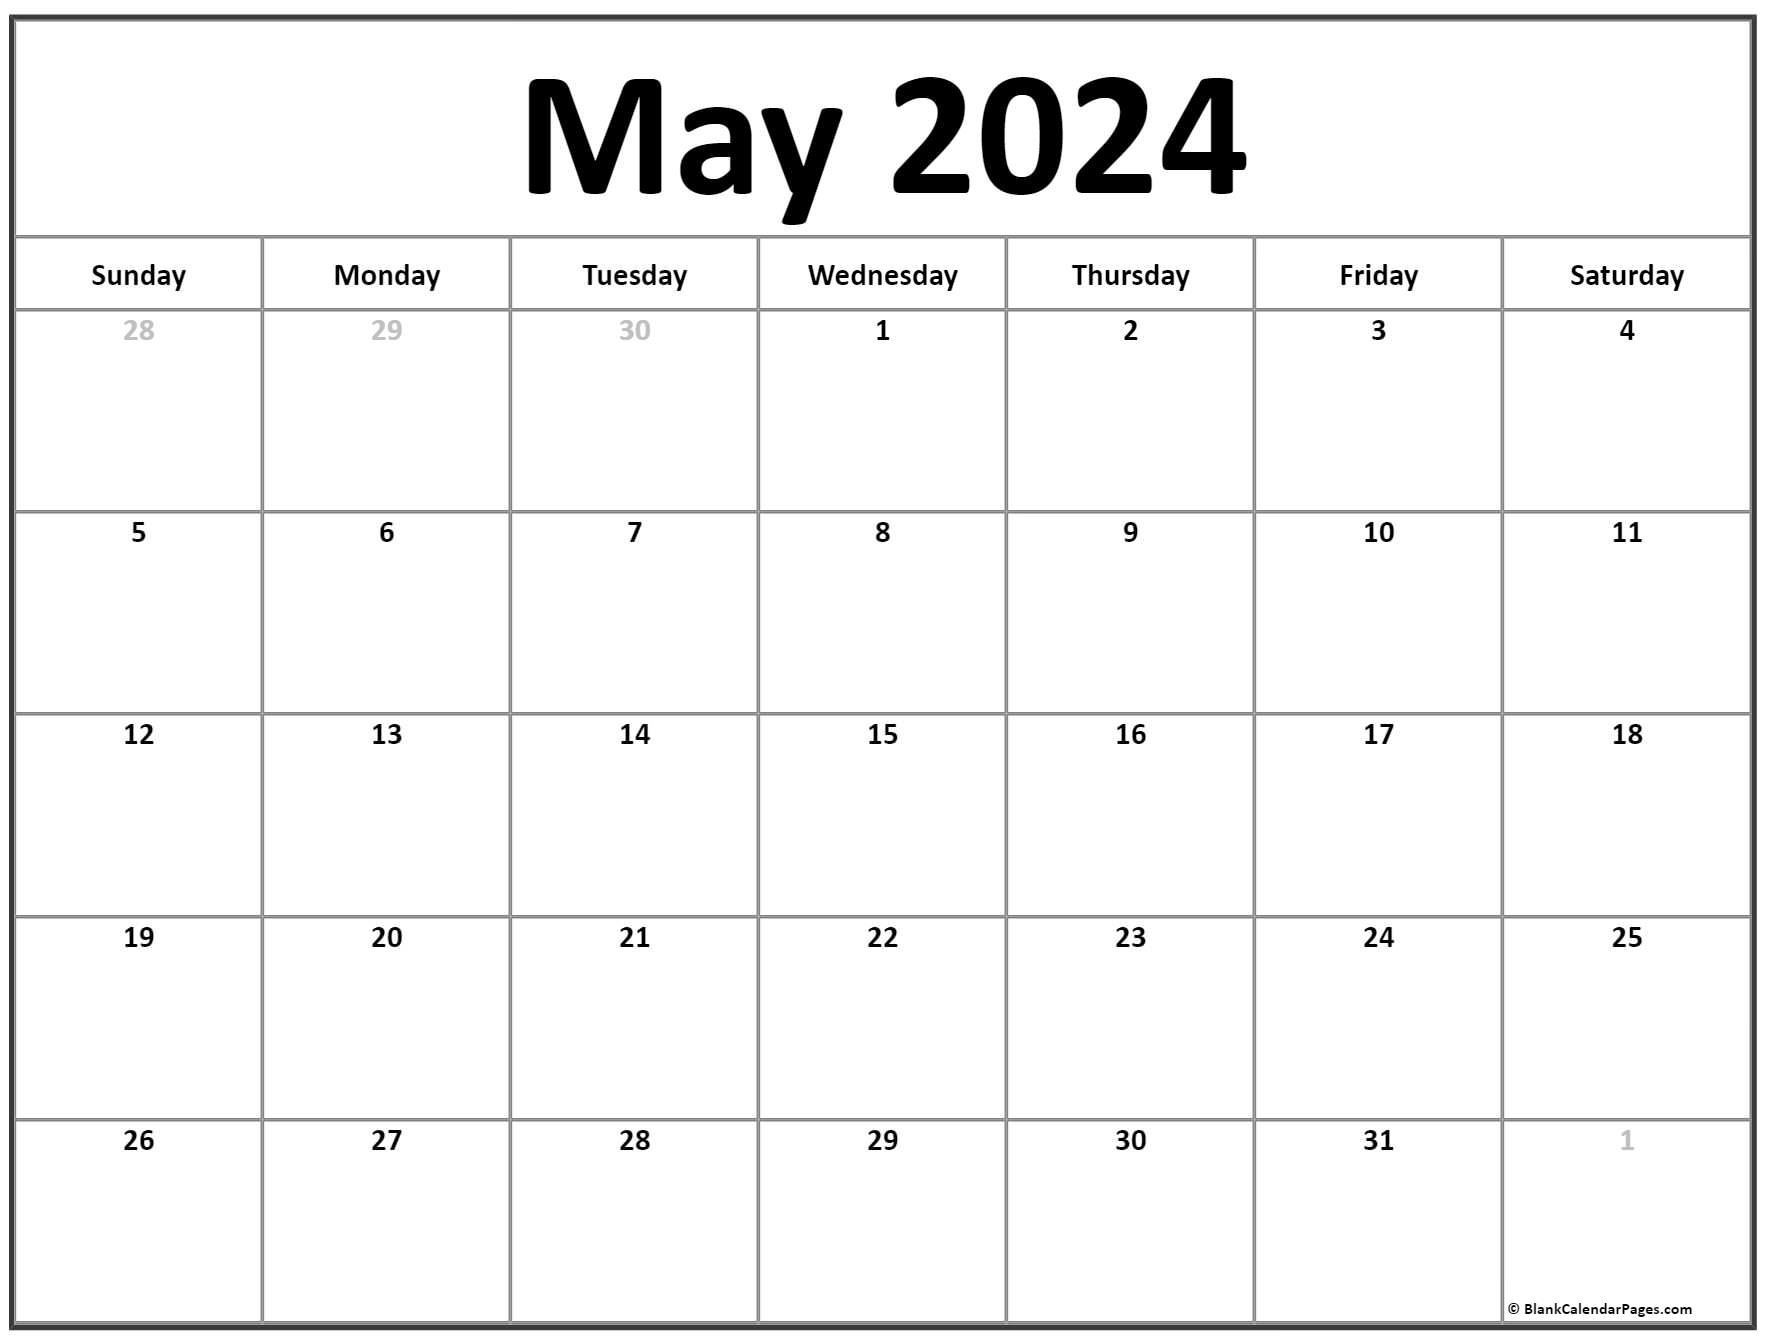 How Many Days Till May 20 2024 Trix Alameda